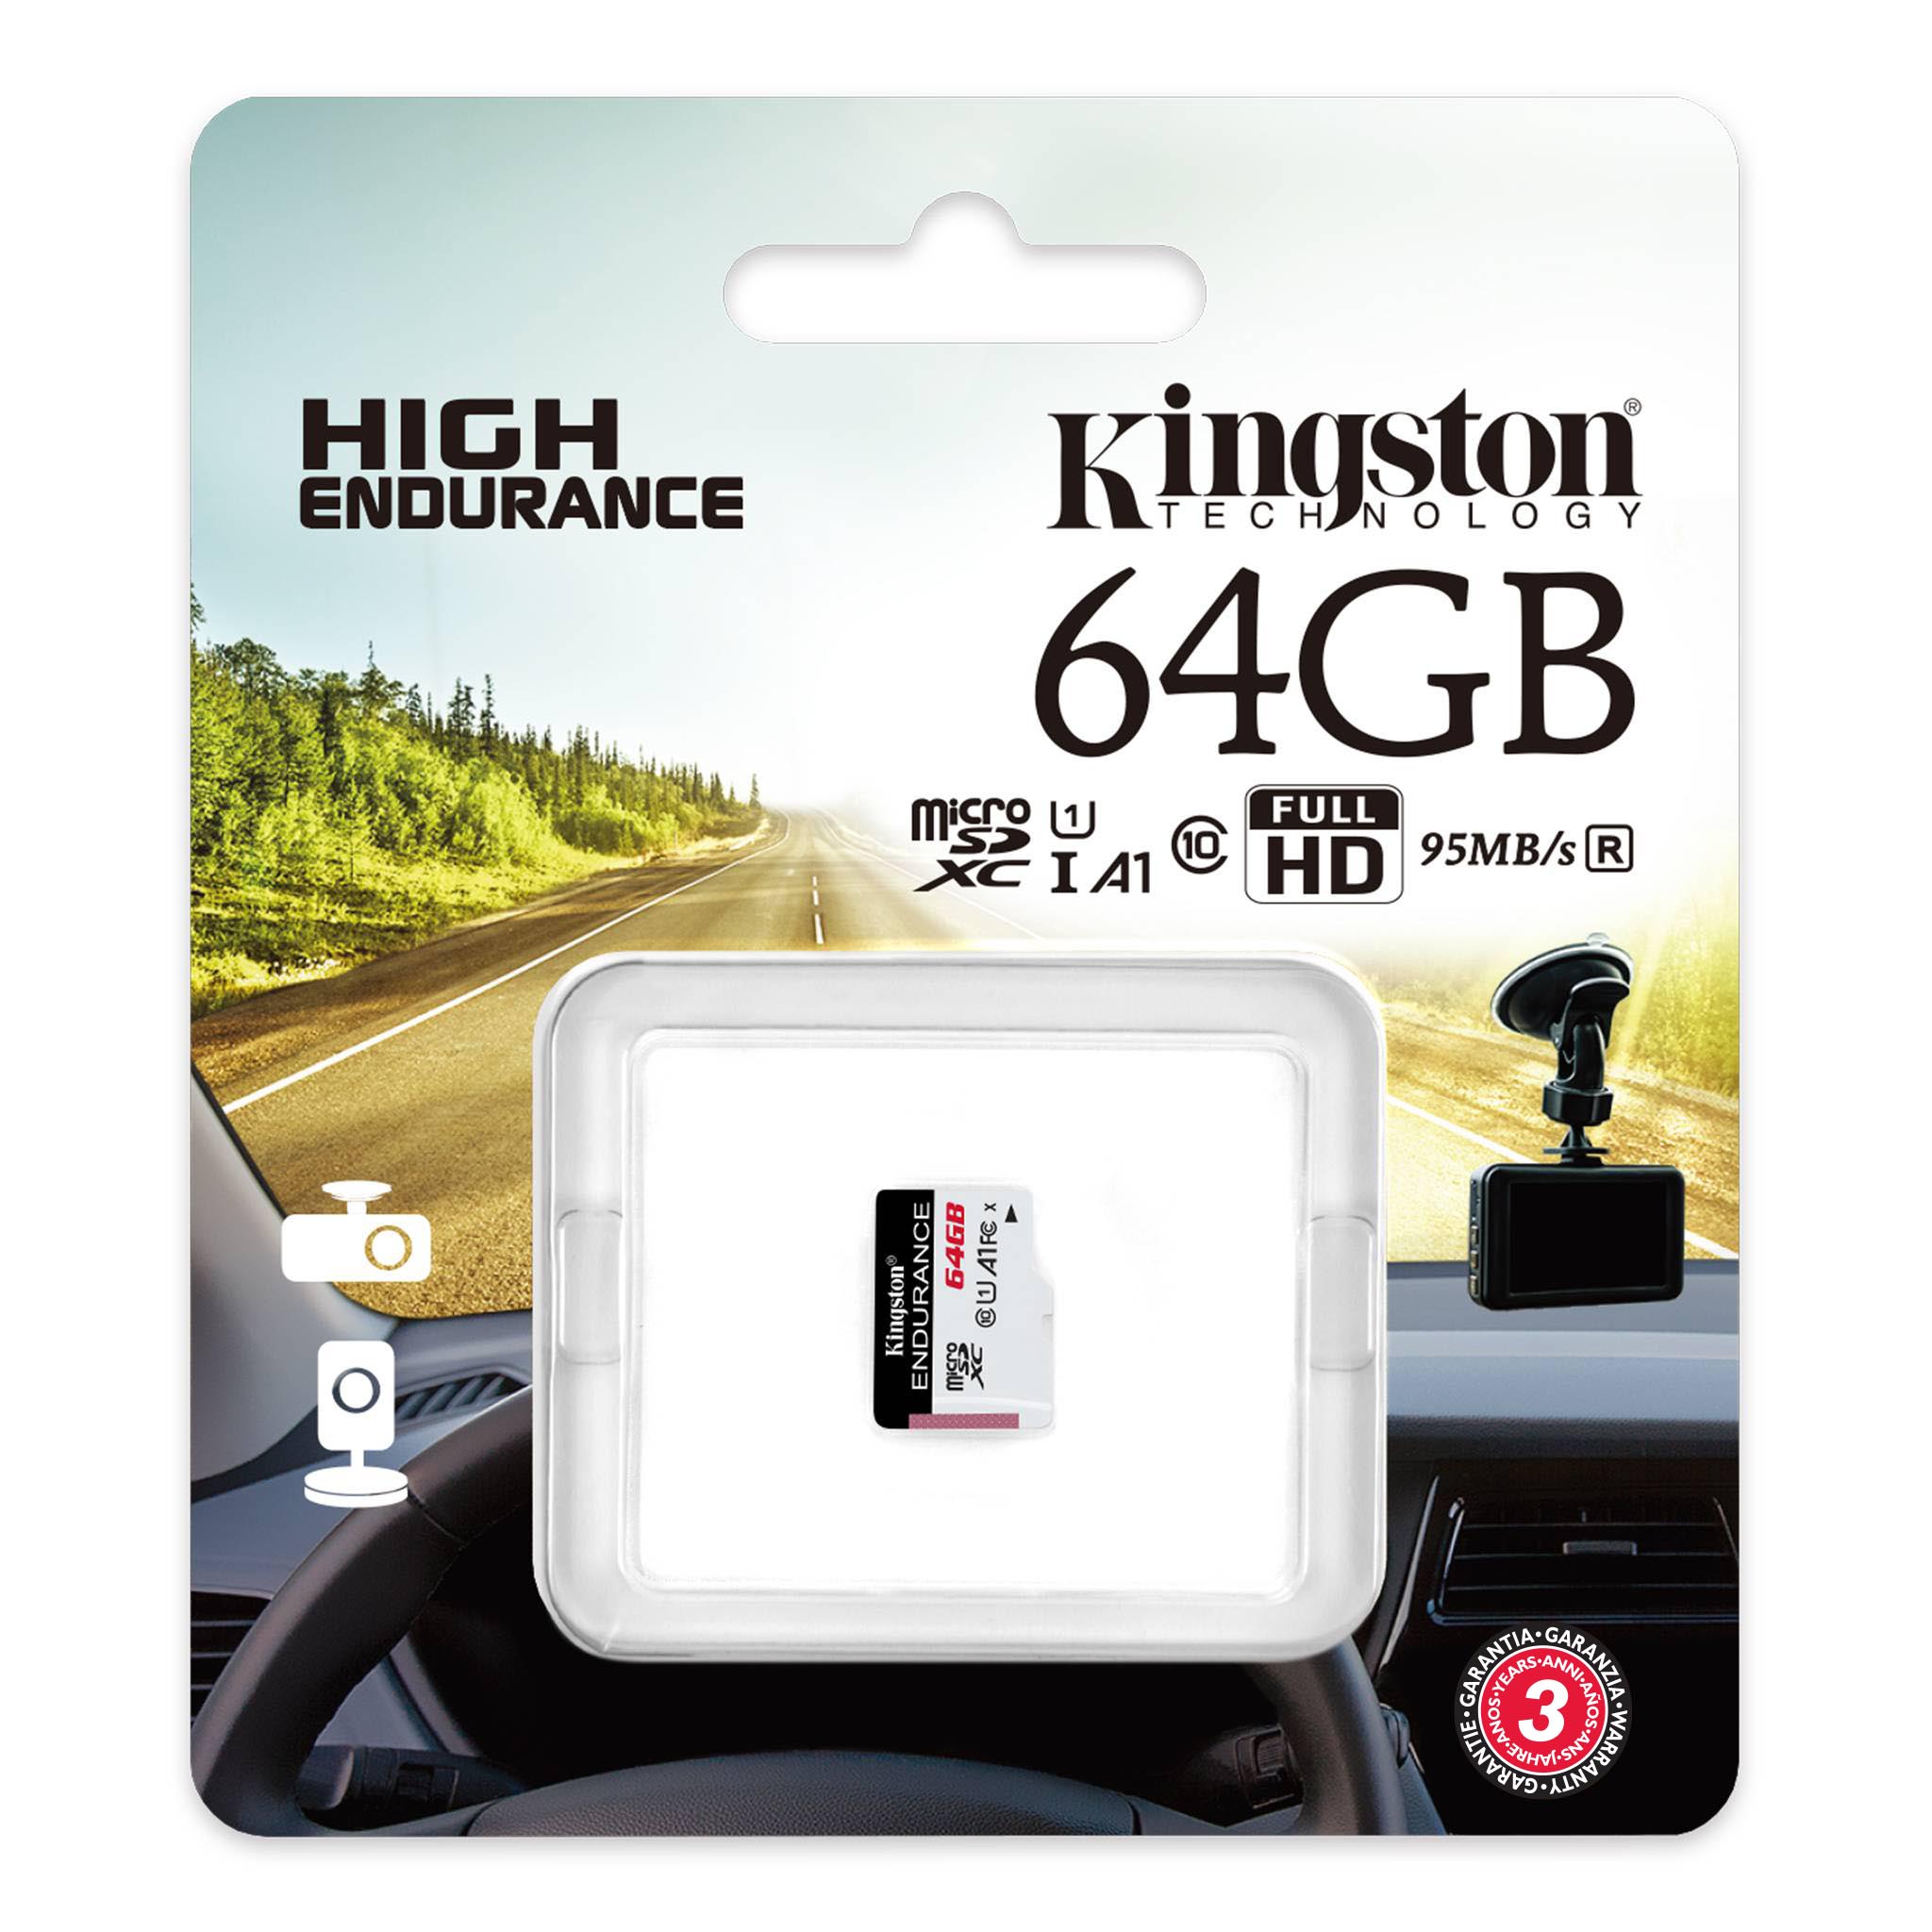 Endurance microSD Card Kingston Technology